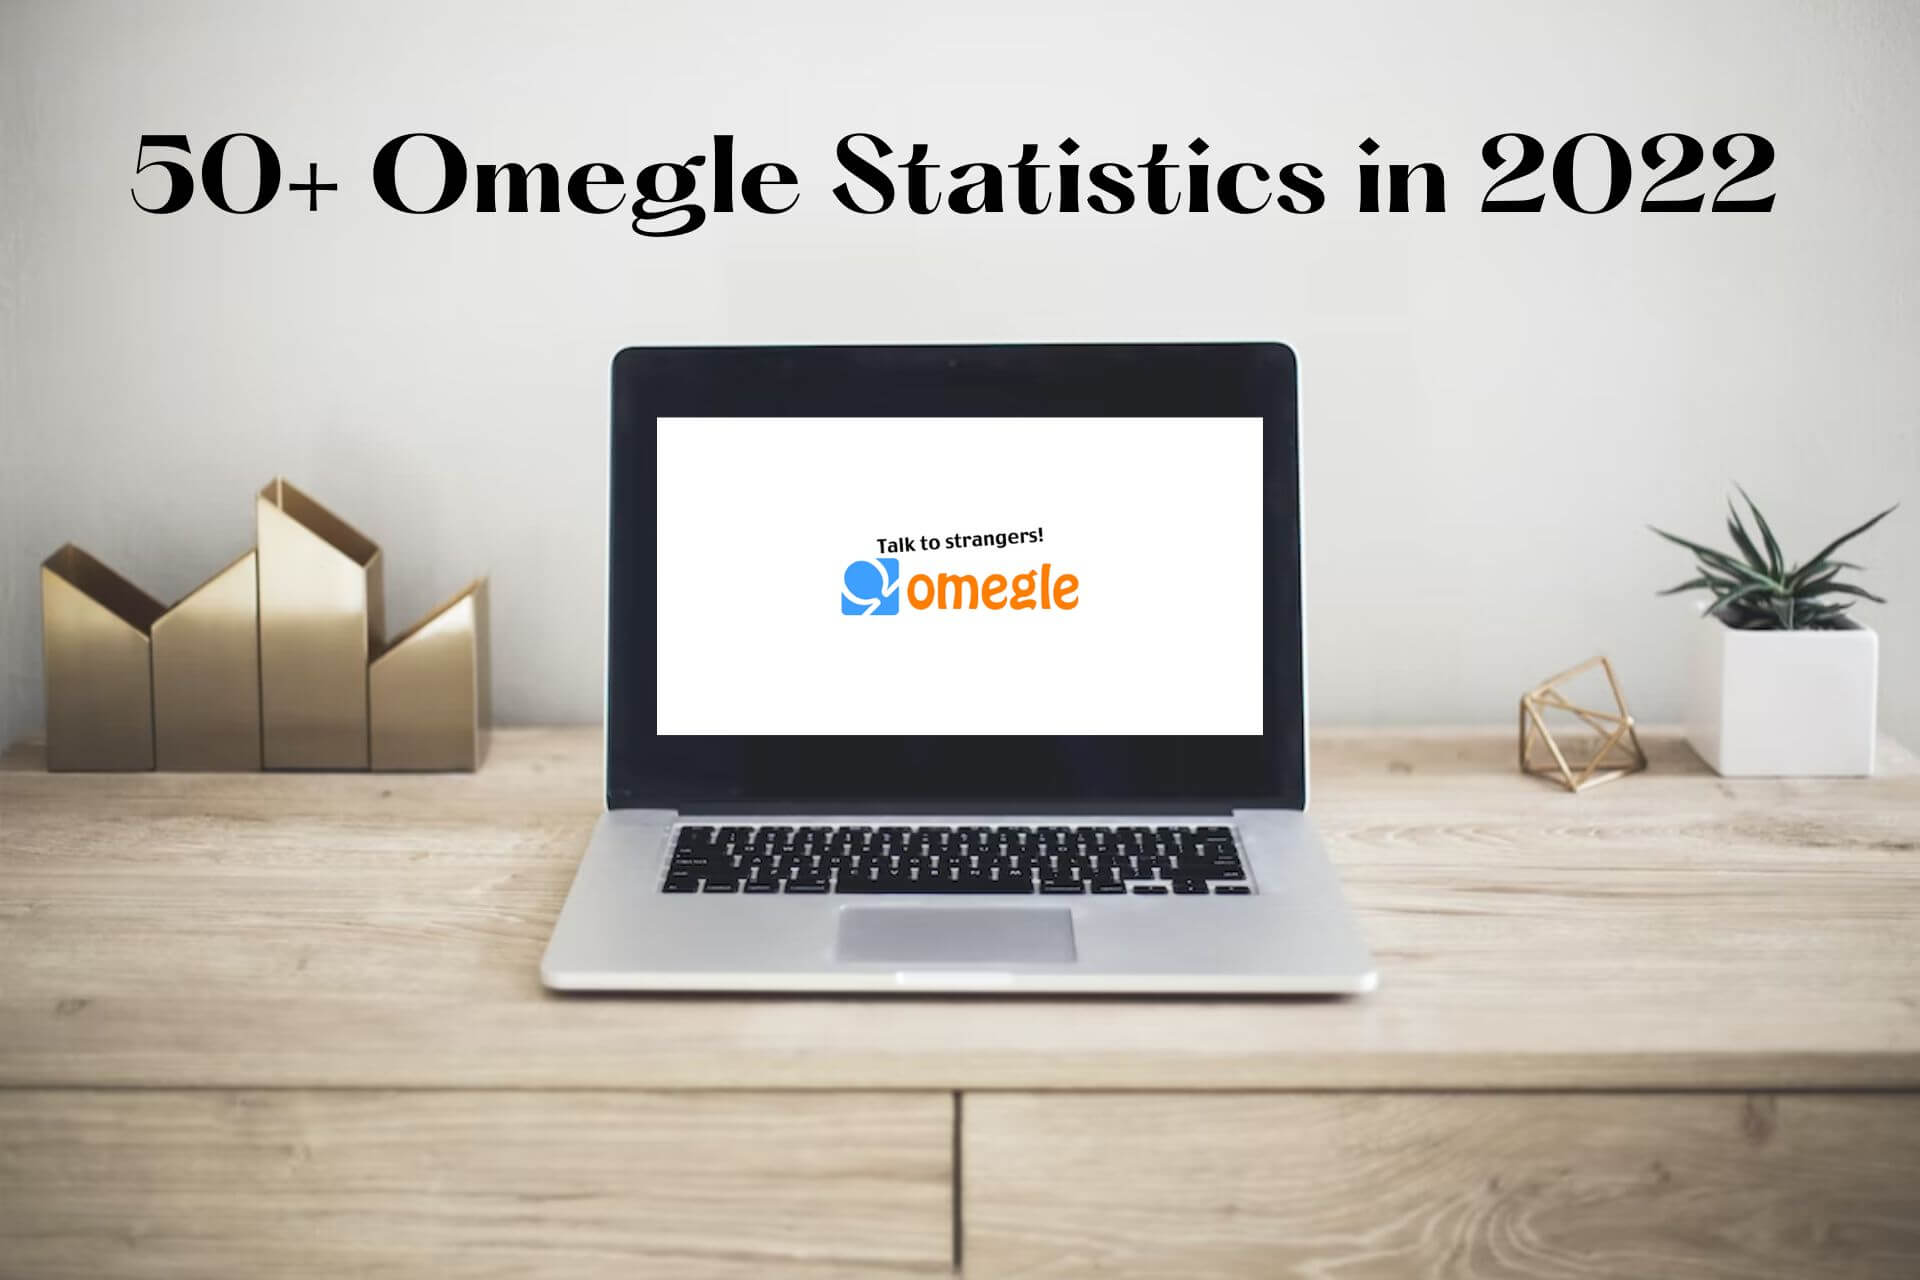 Omegle Statistics